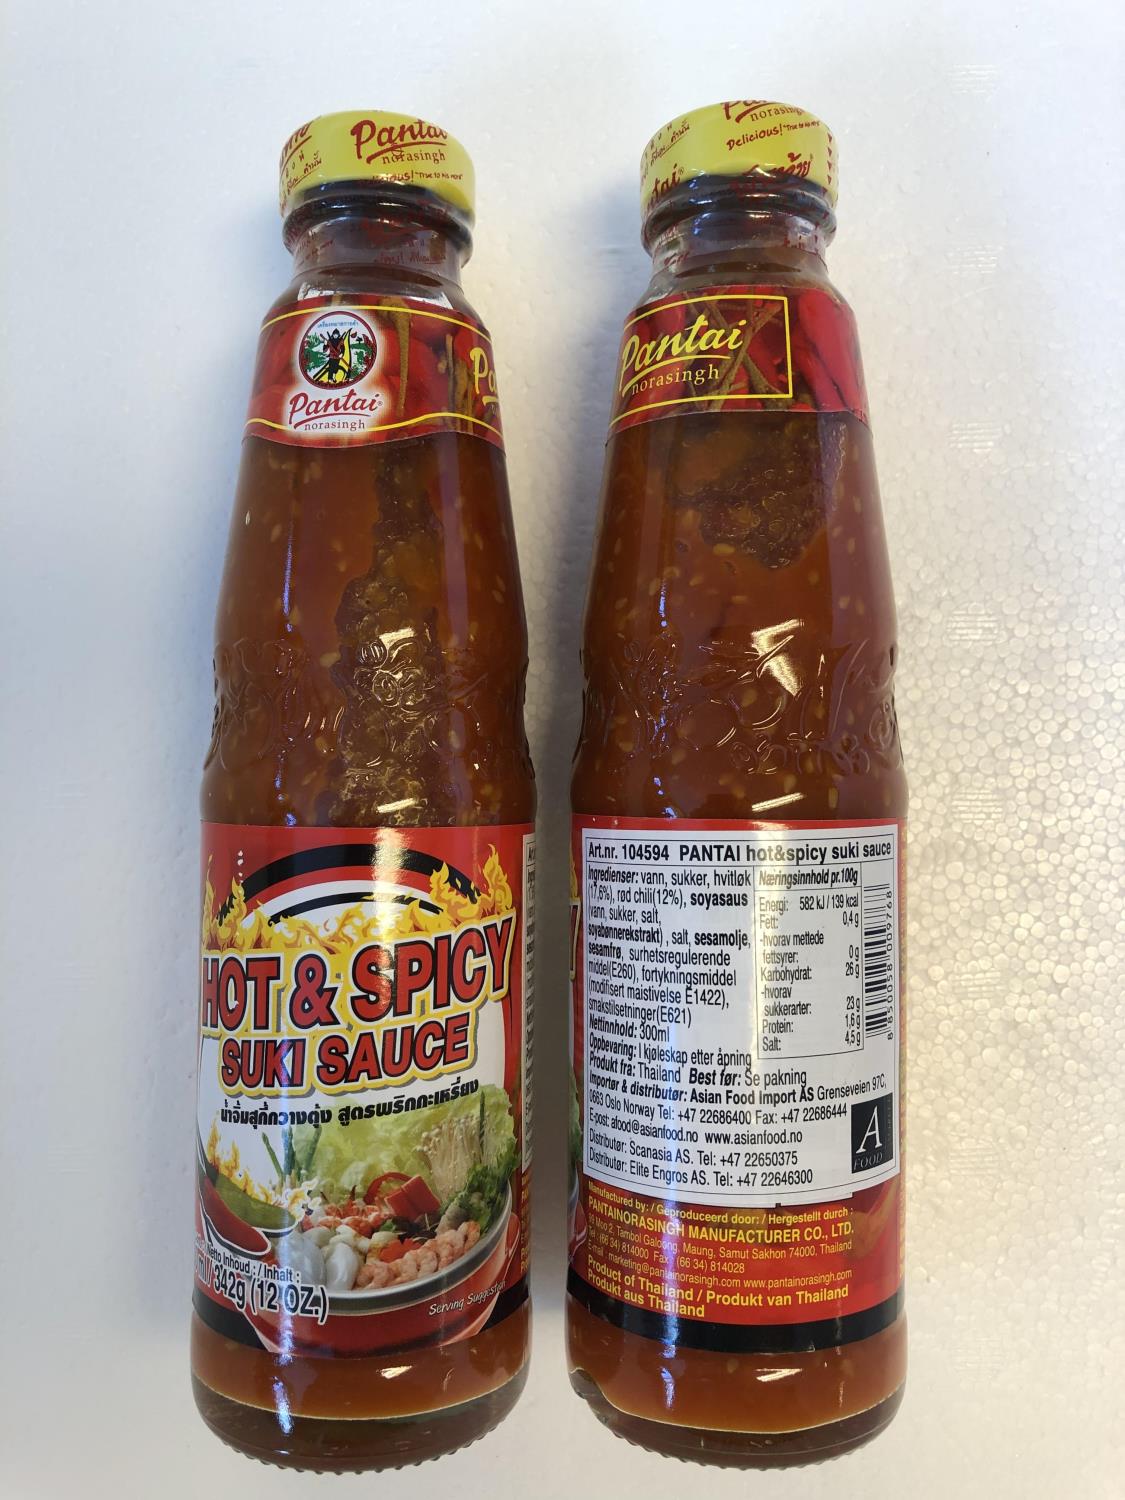 PANTAI Hot & Spicy Suki Sauce 300ml å